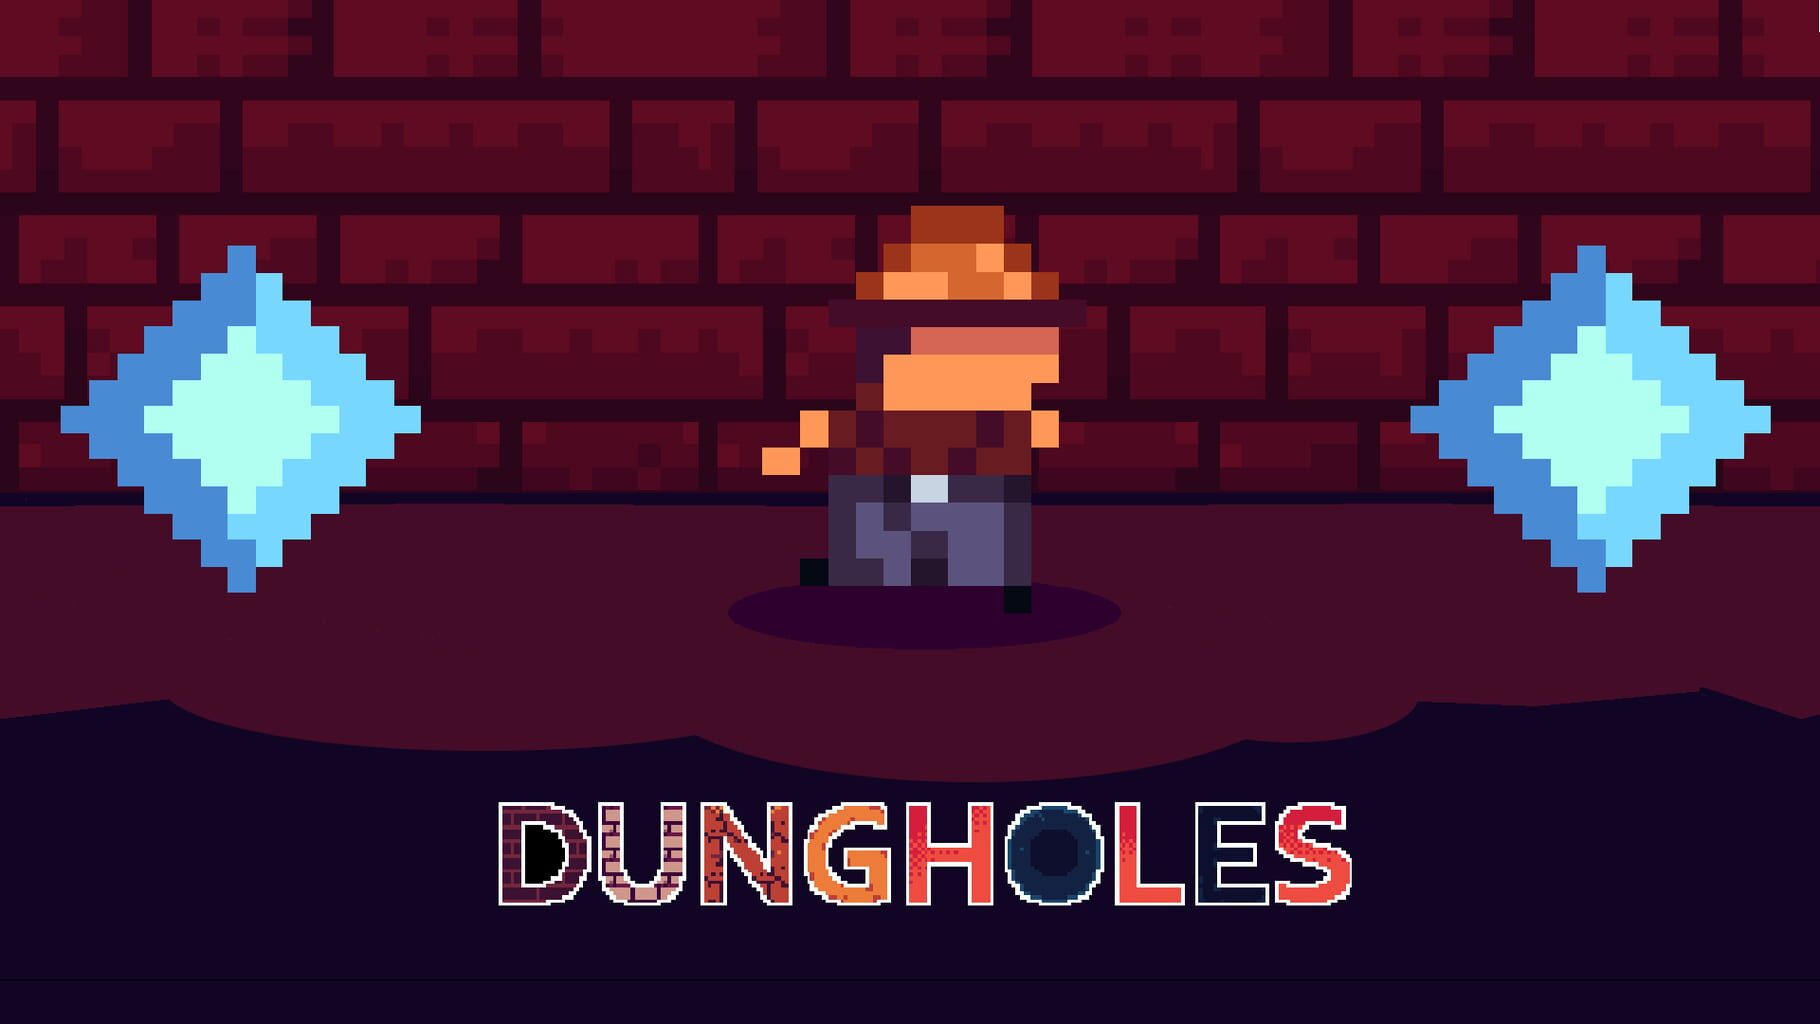 Dungholes artwork